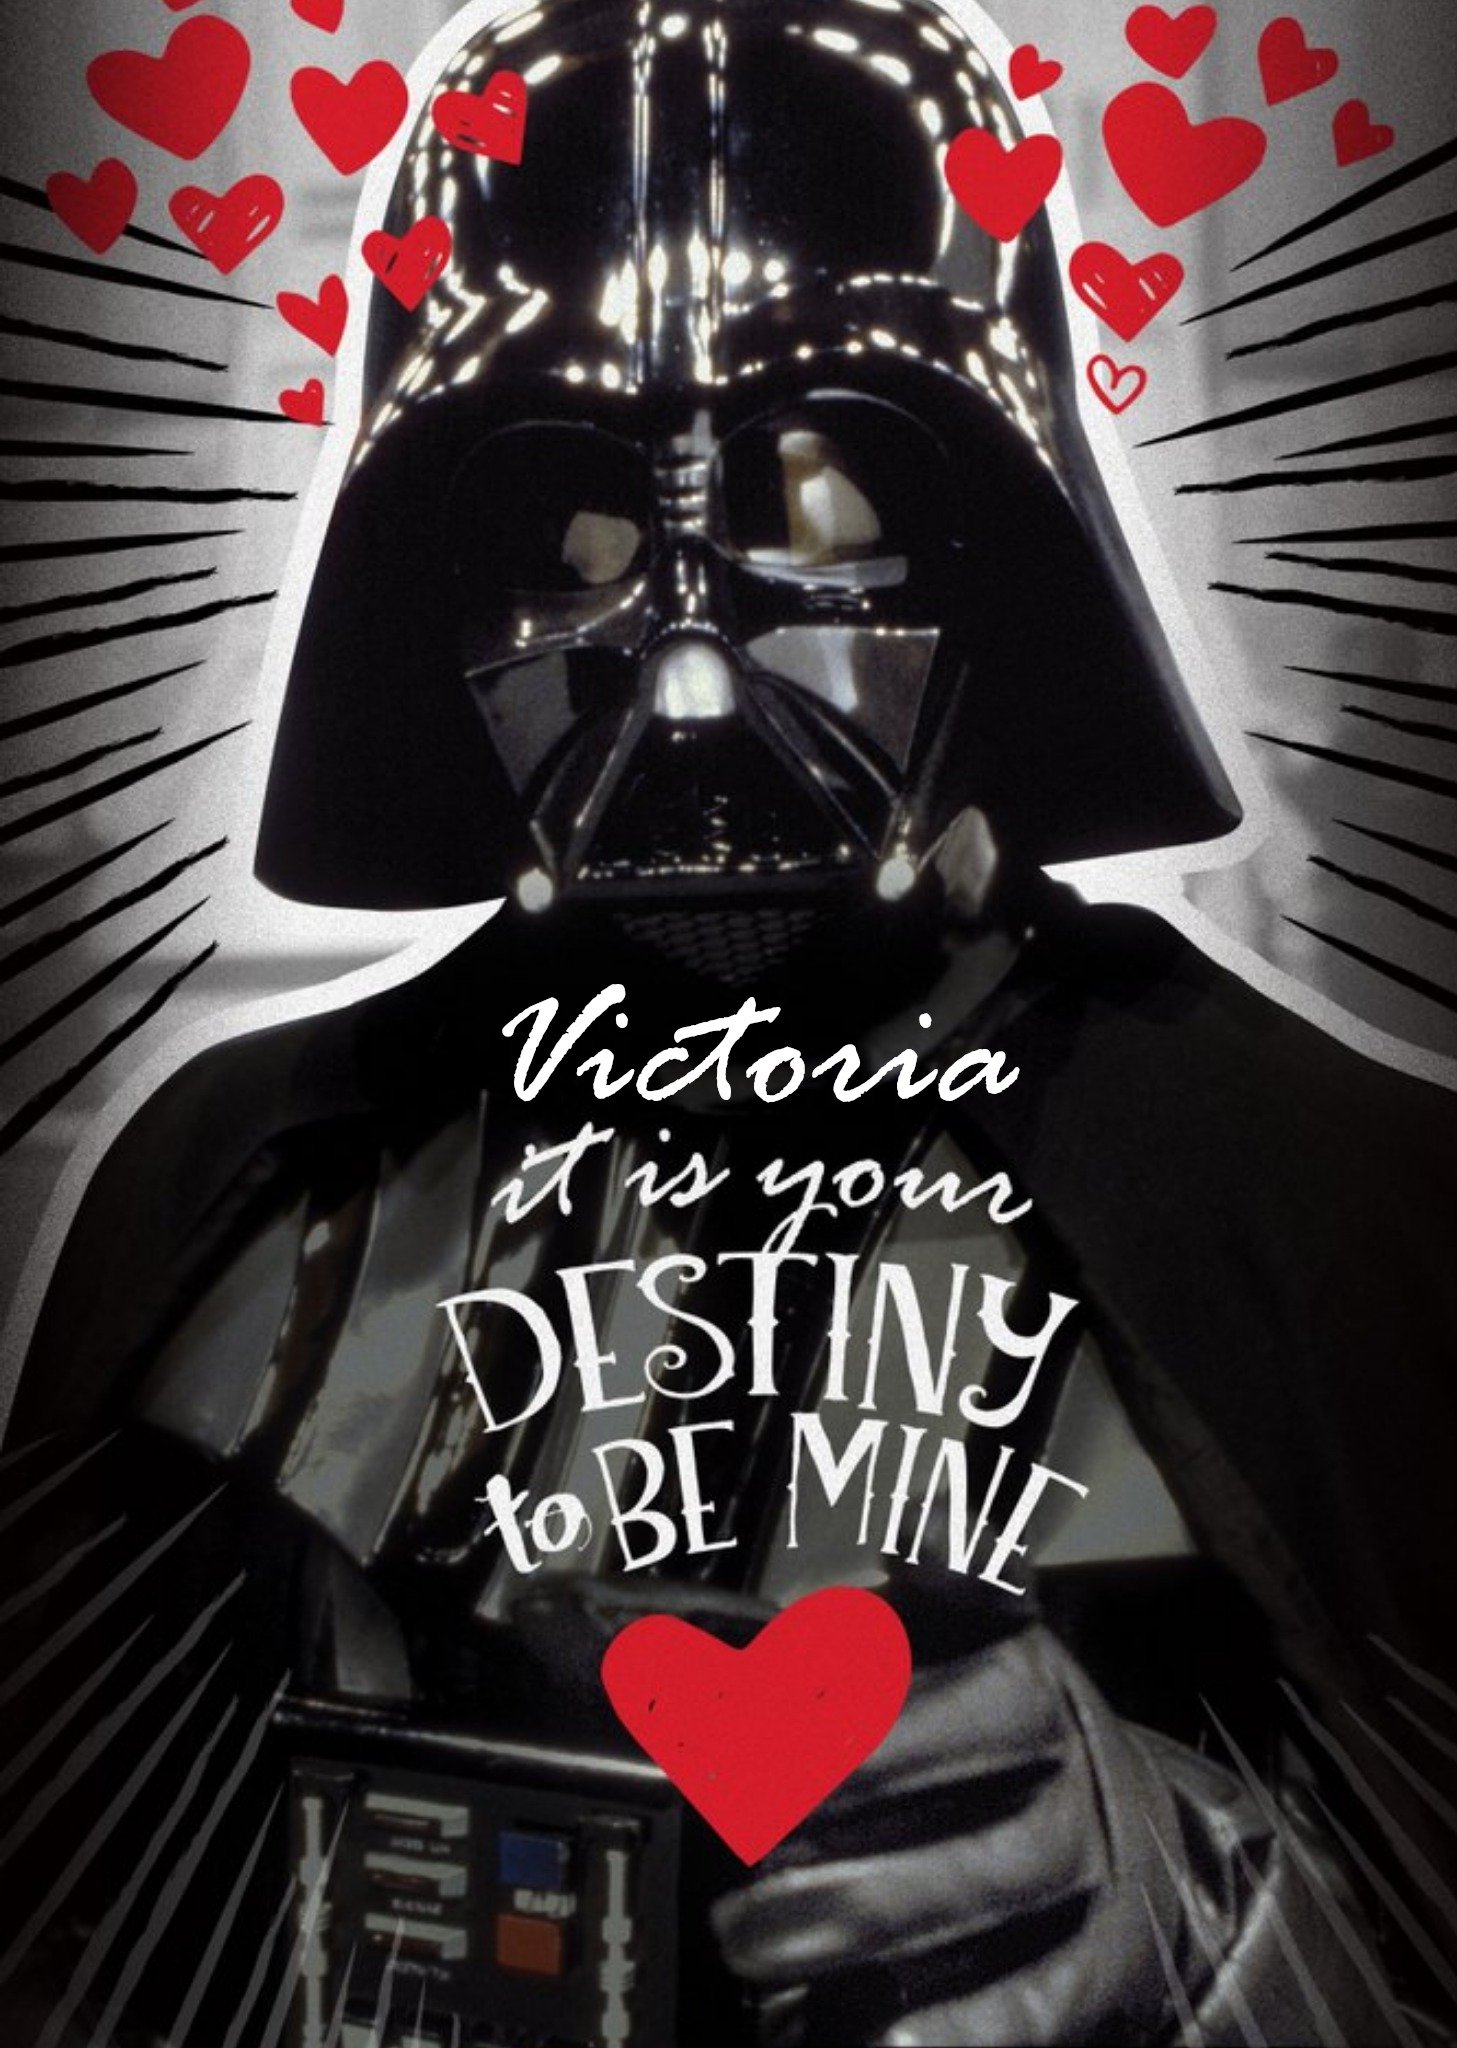 Disney Star Wars Valentine's Card - Darth Vader, Large